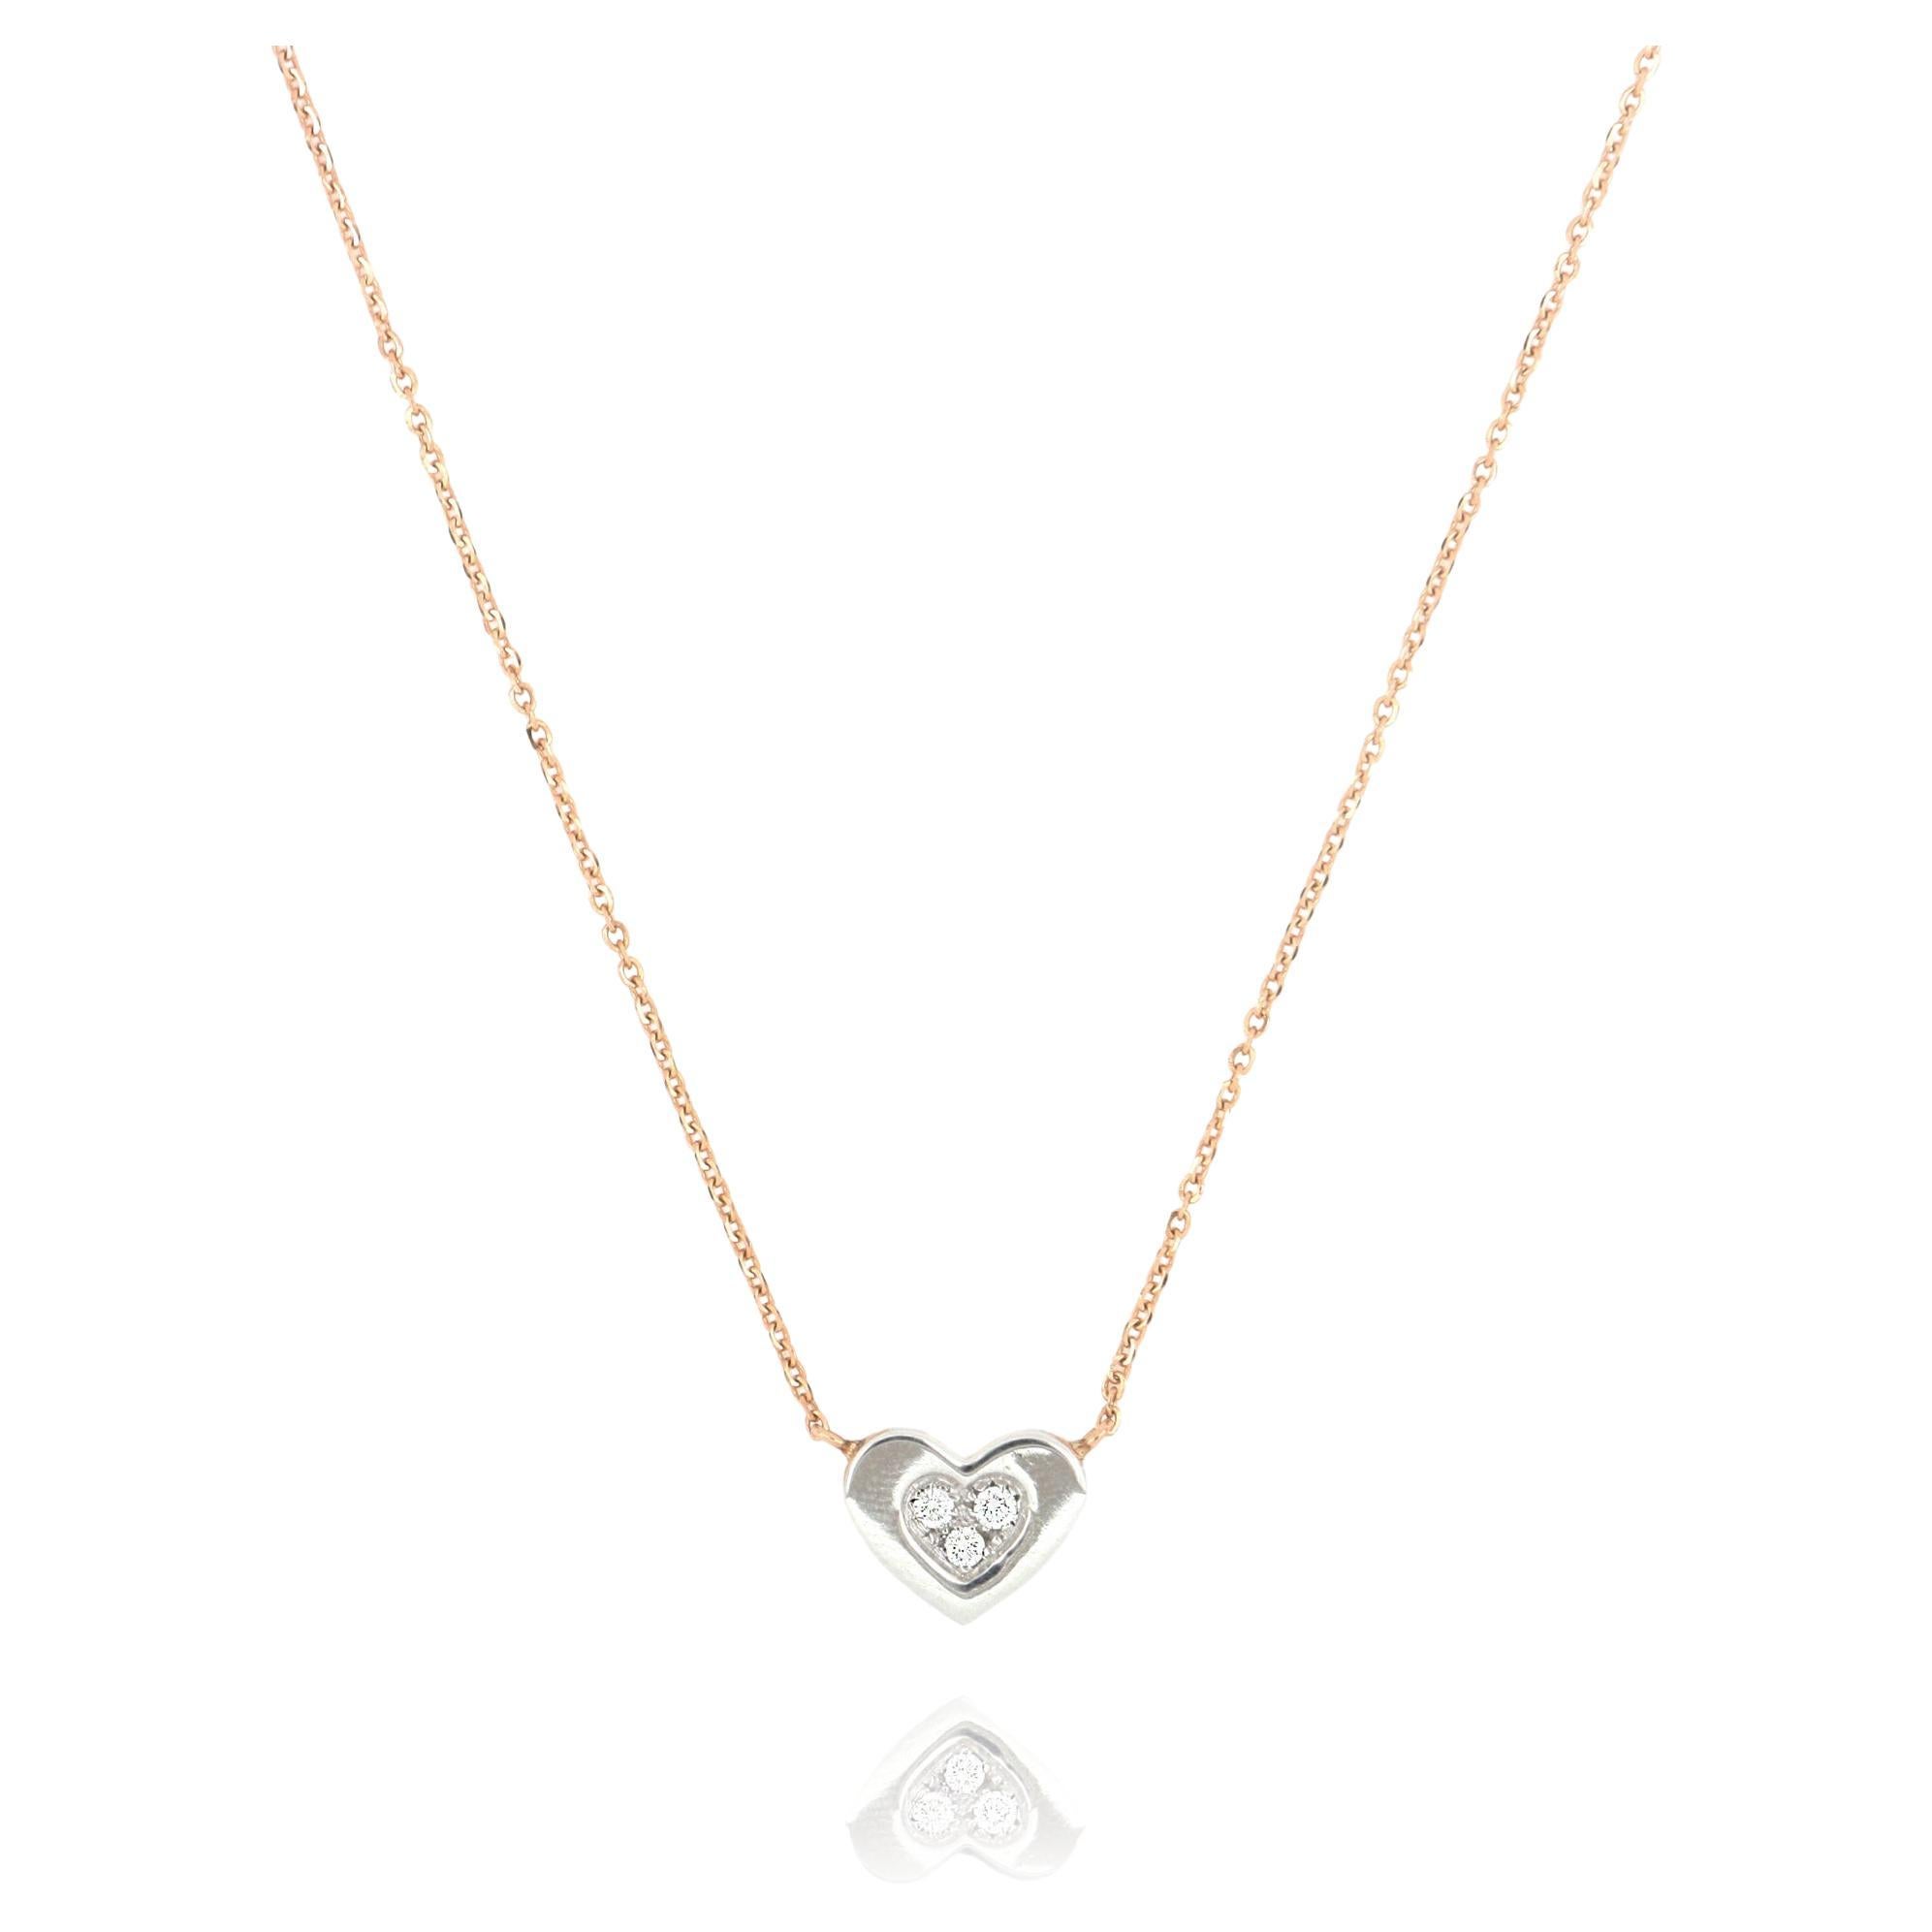 Le Secret Necklace with Heart of Diamonds For Sale